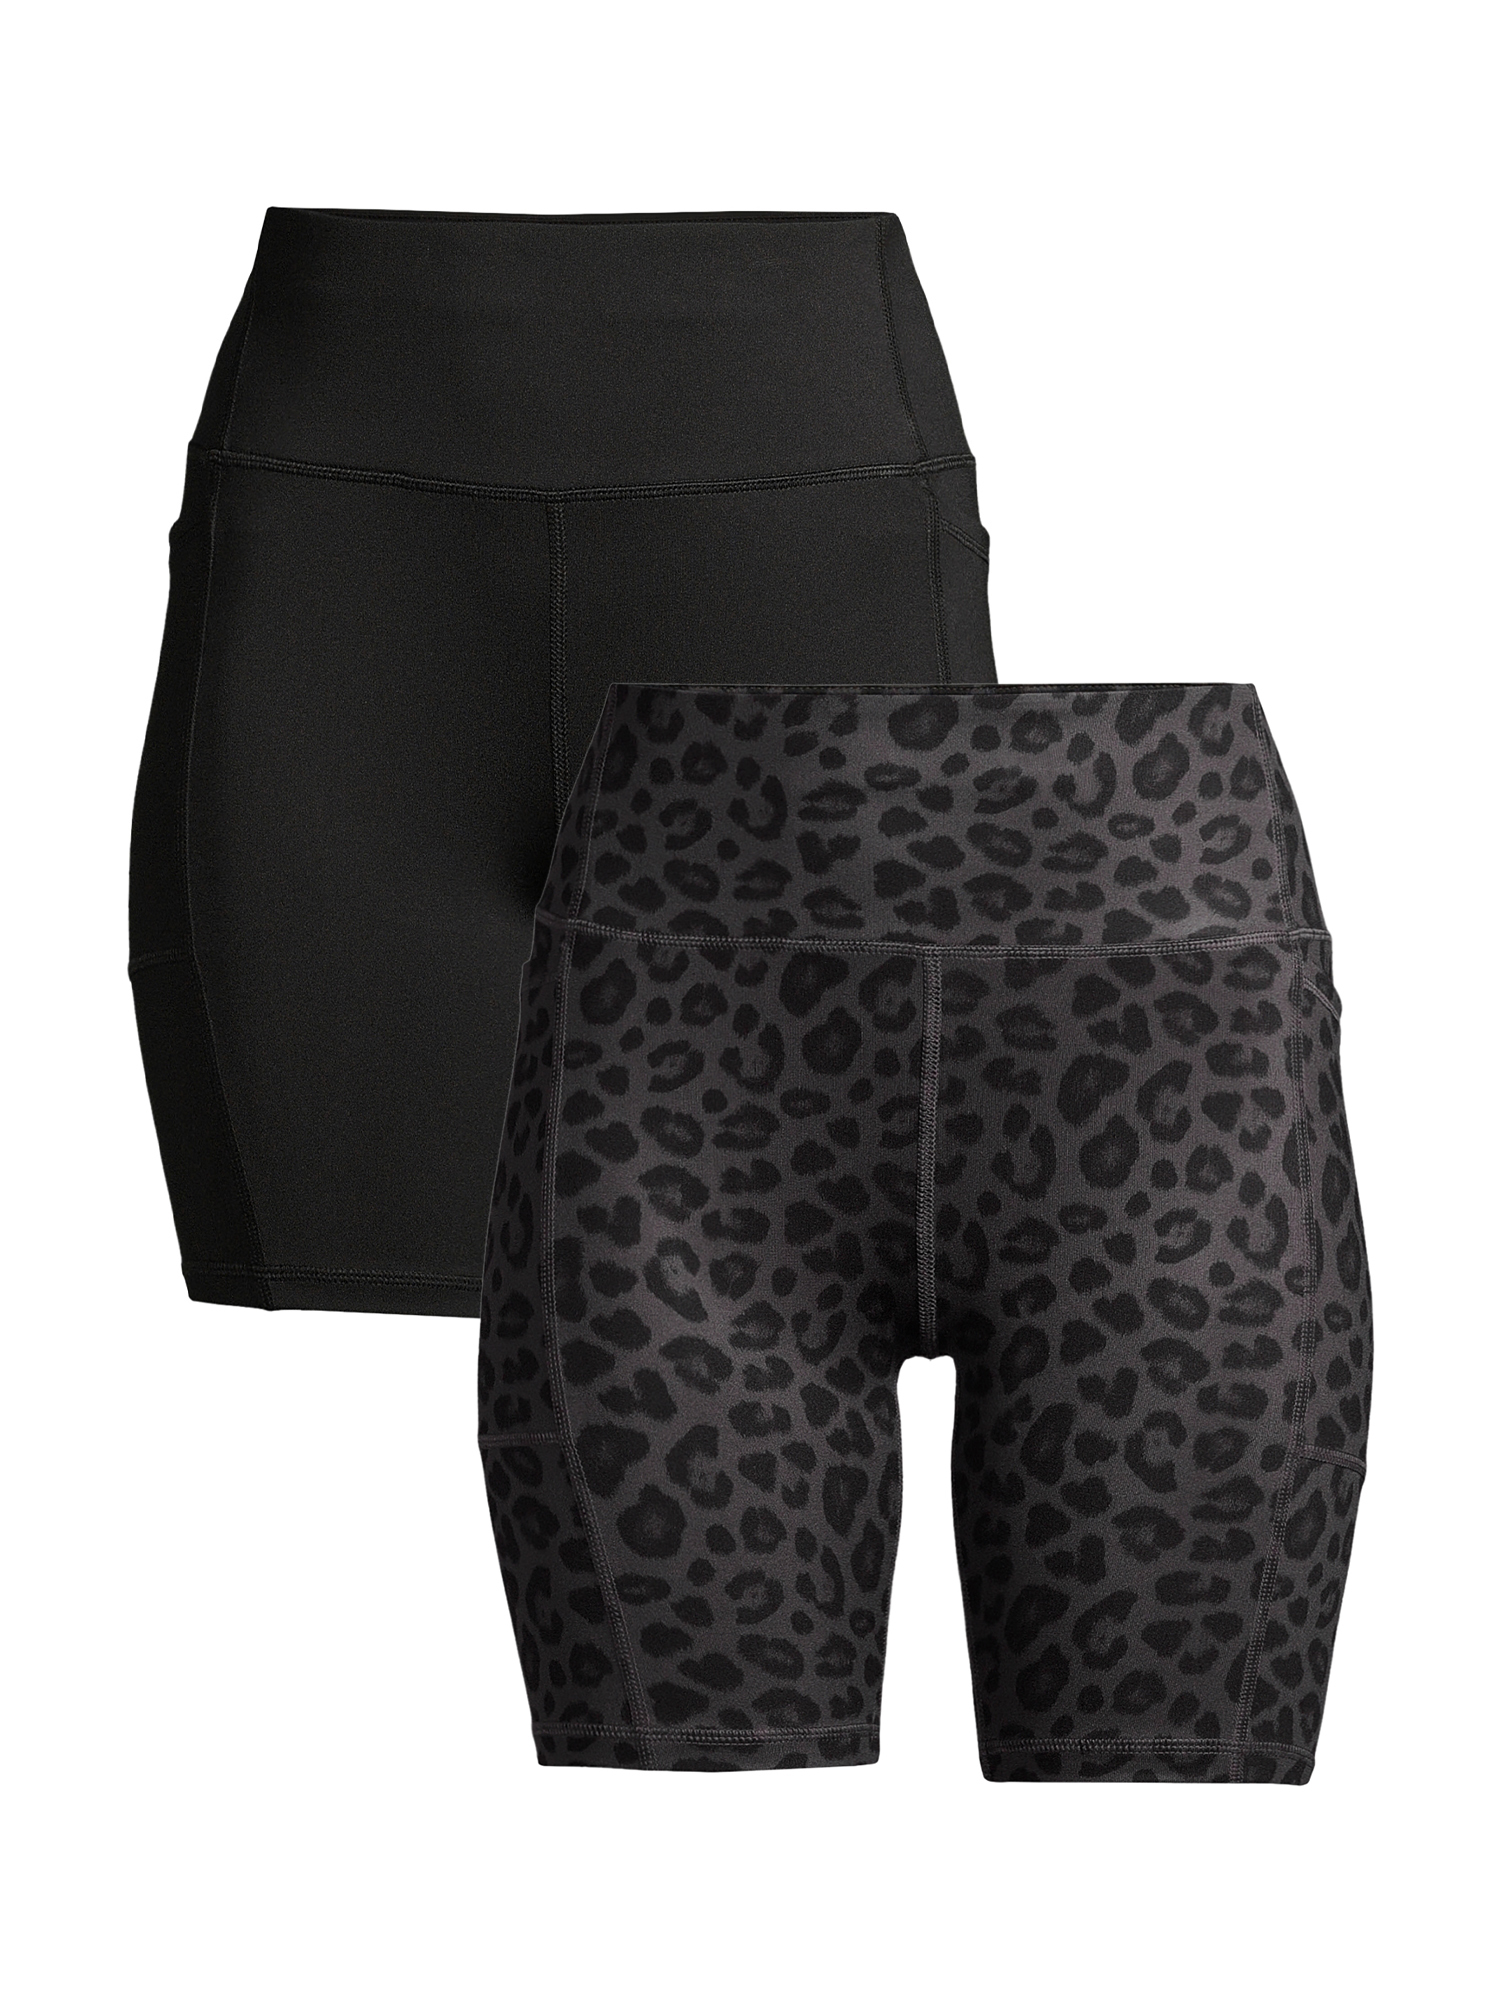 Athletic Works Women’s Bike Shorts, 2-Pack - Walmart.com